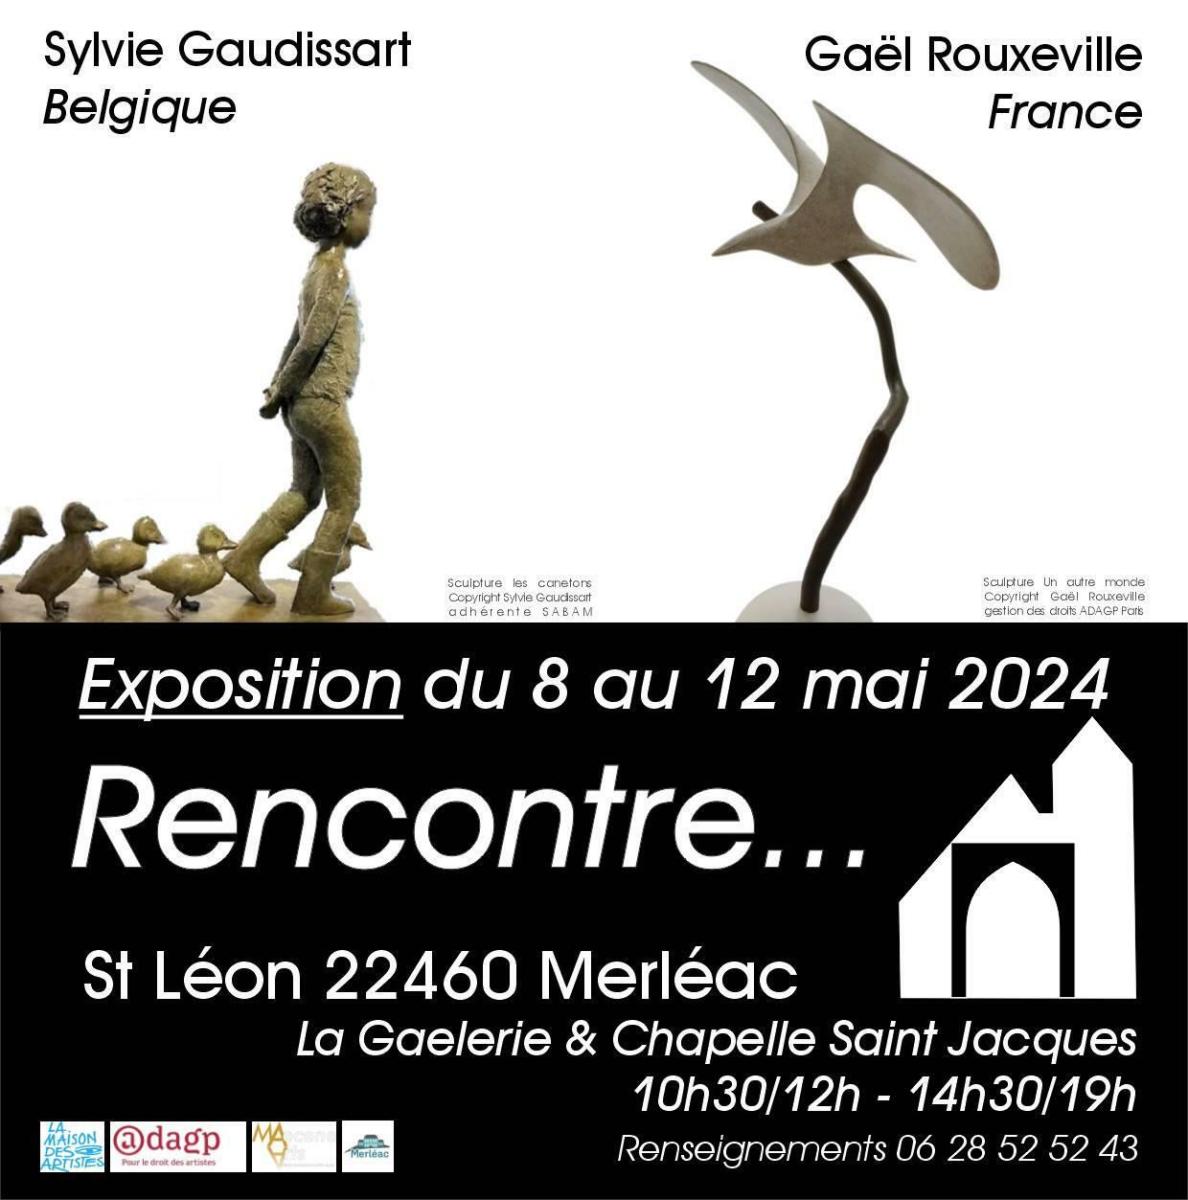 Exposition Gaël Rouxeville- Sylvie Gaudissart Chapelle St Jacques